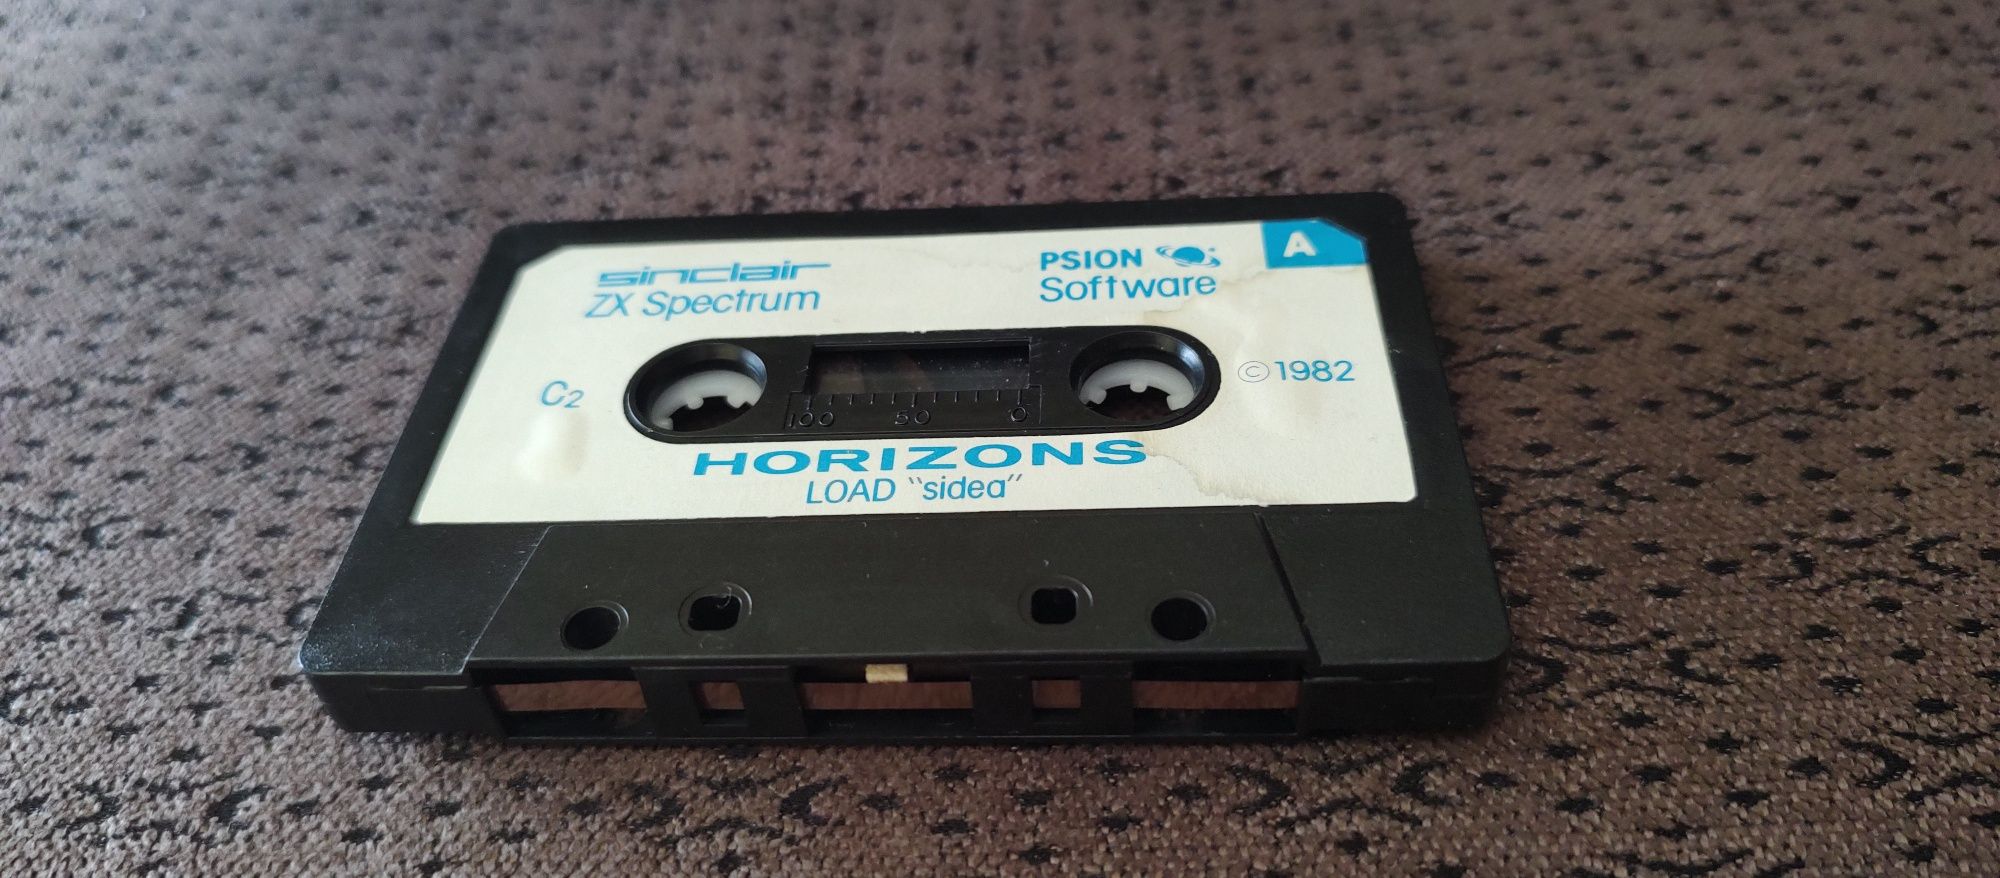 Horizons load "sideb" 1982 Sinclair ZX Spectrum